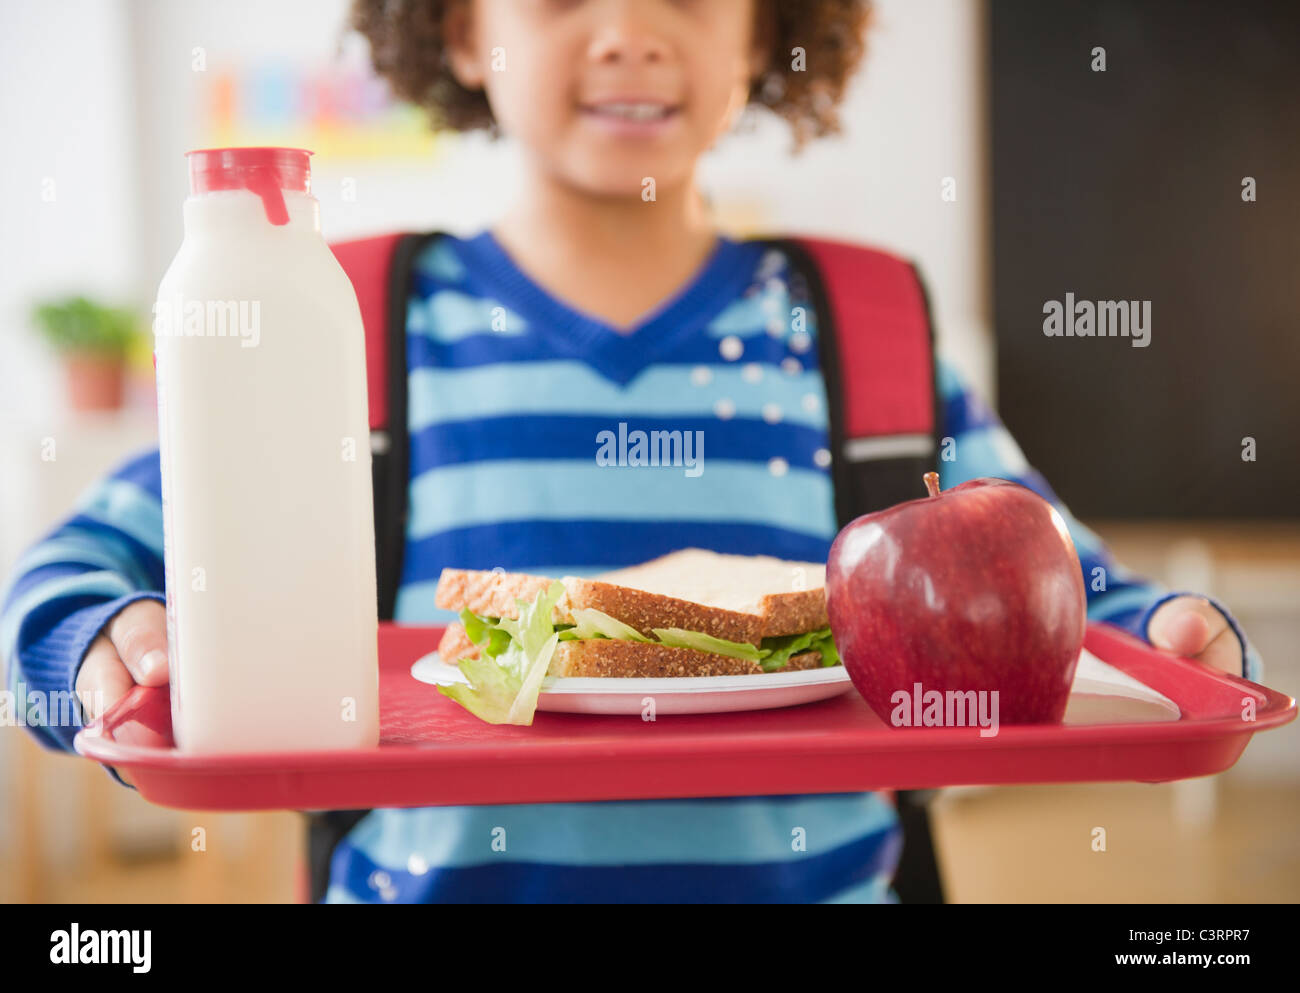 https://c8.alamy.com/comp/C3RPR7/african-american-school-girl-holding-lunch-on-a-tray-C3RPR7.jpg